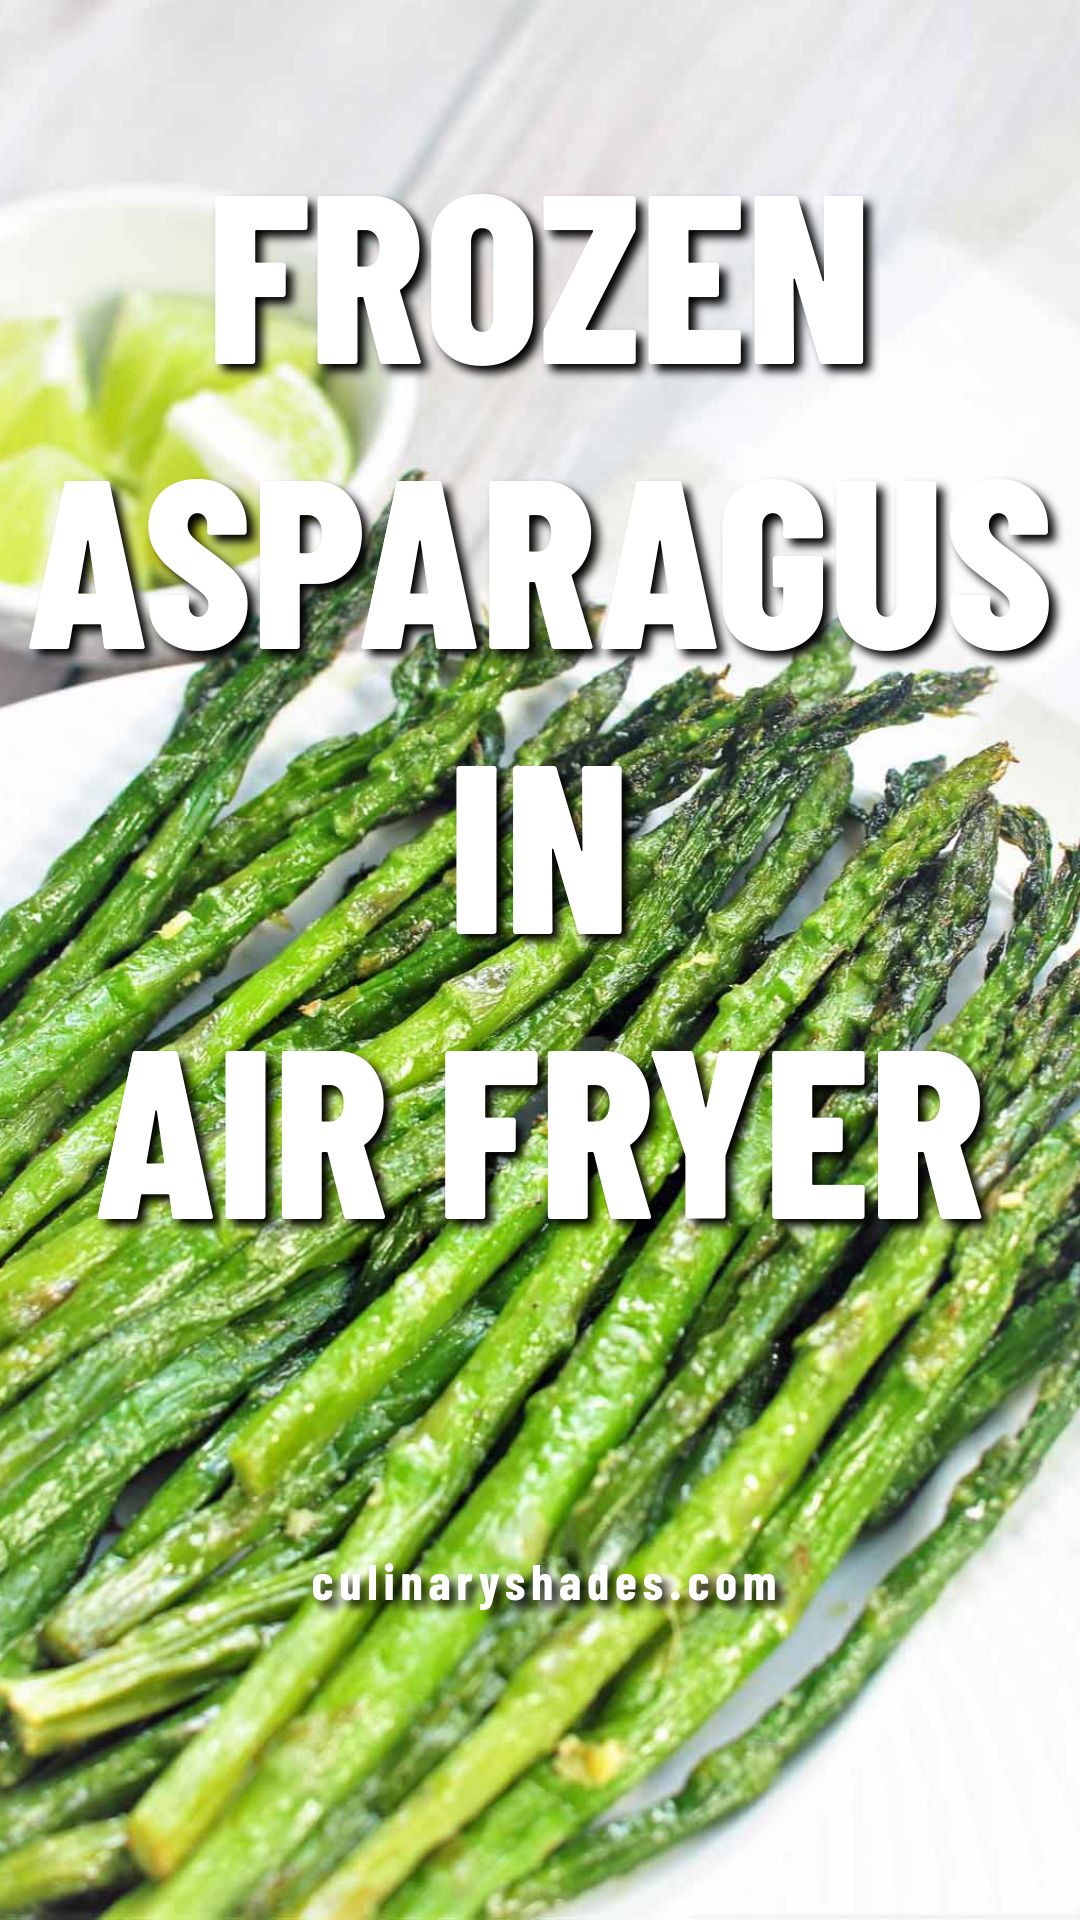 Air fried frozen asparagus.